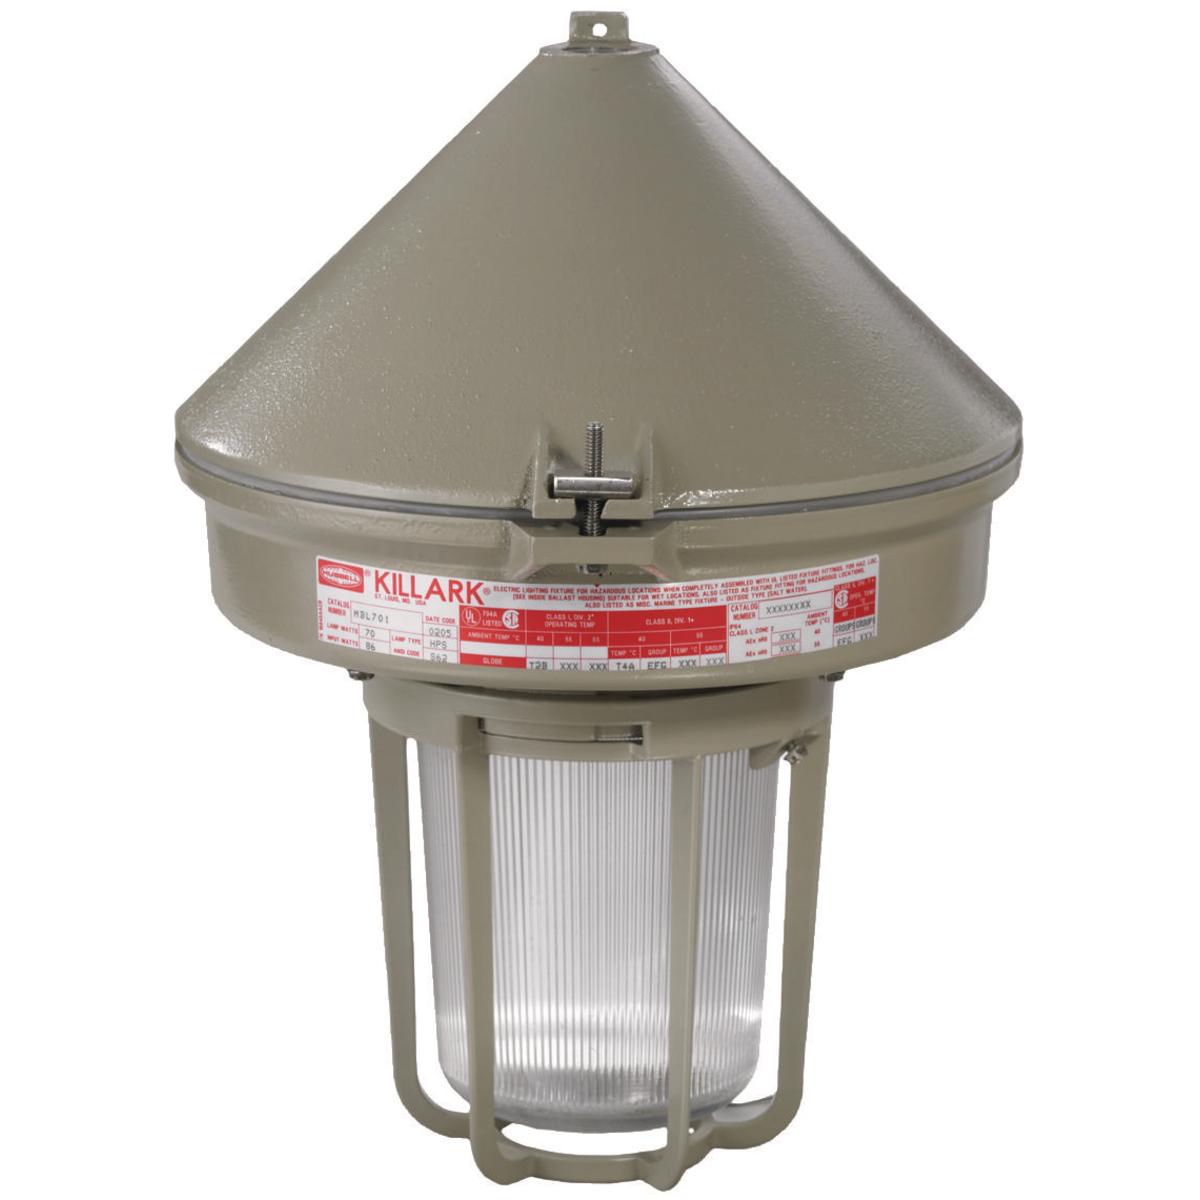 Hubbell VM1L4030C2R1G VM1L Series LED Low Bay, Hazardous Rated 40 Watt, 120-277 VAC 5000K, 5490 Lumens, Cone Top Mount, Type I Glass Refractor, and Guard  ; Supplemental 20KA/10KV Surge Protection is standard for 120-277 VAC models &  10KA/10KV Surge Protection is standard for